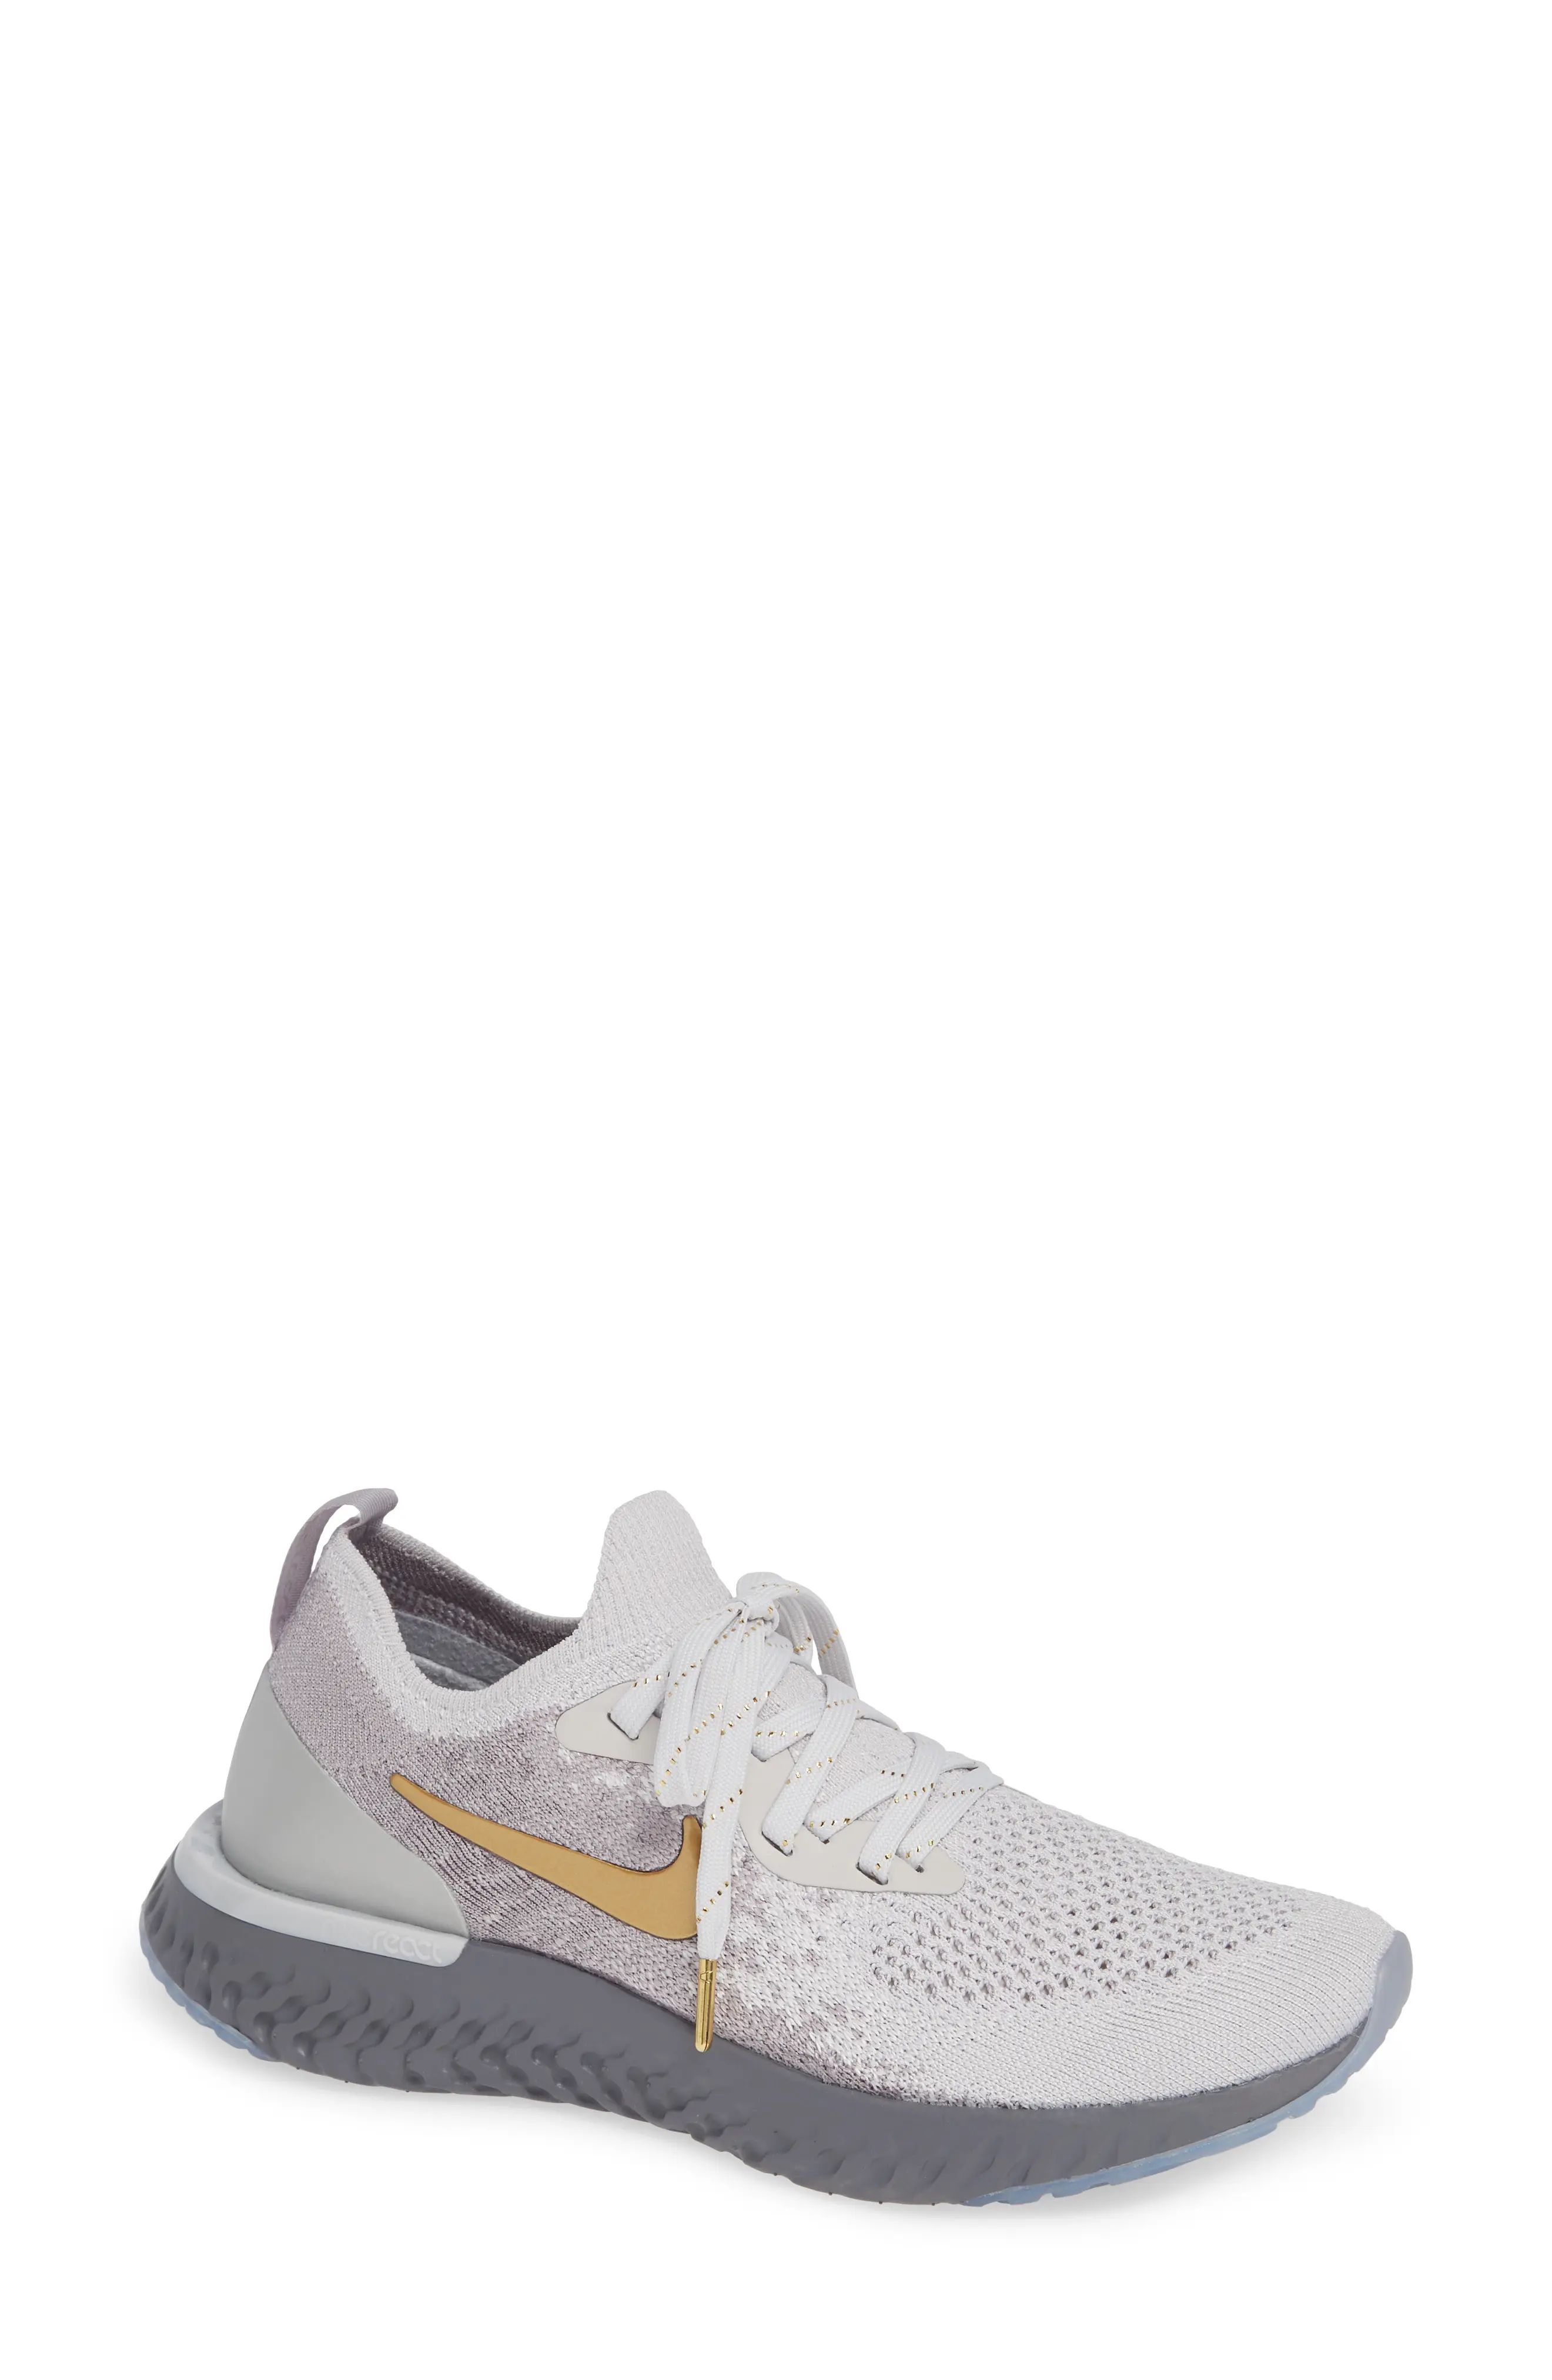 Women's Nike Epic React Flyknit Running Shoe, Size 6 M - Grey | Nordstrom